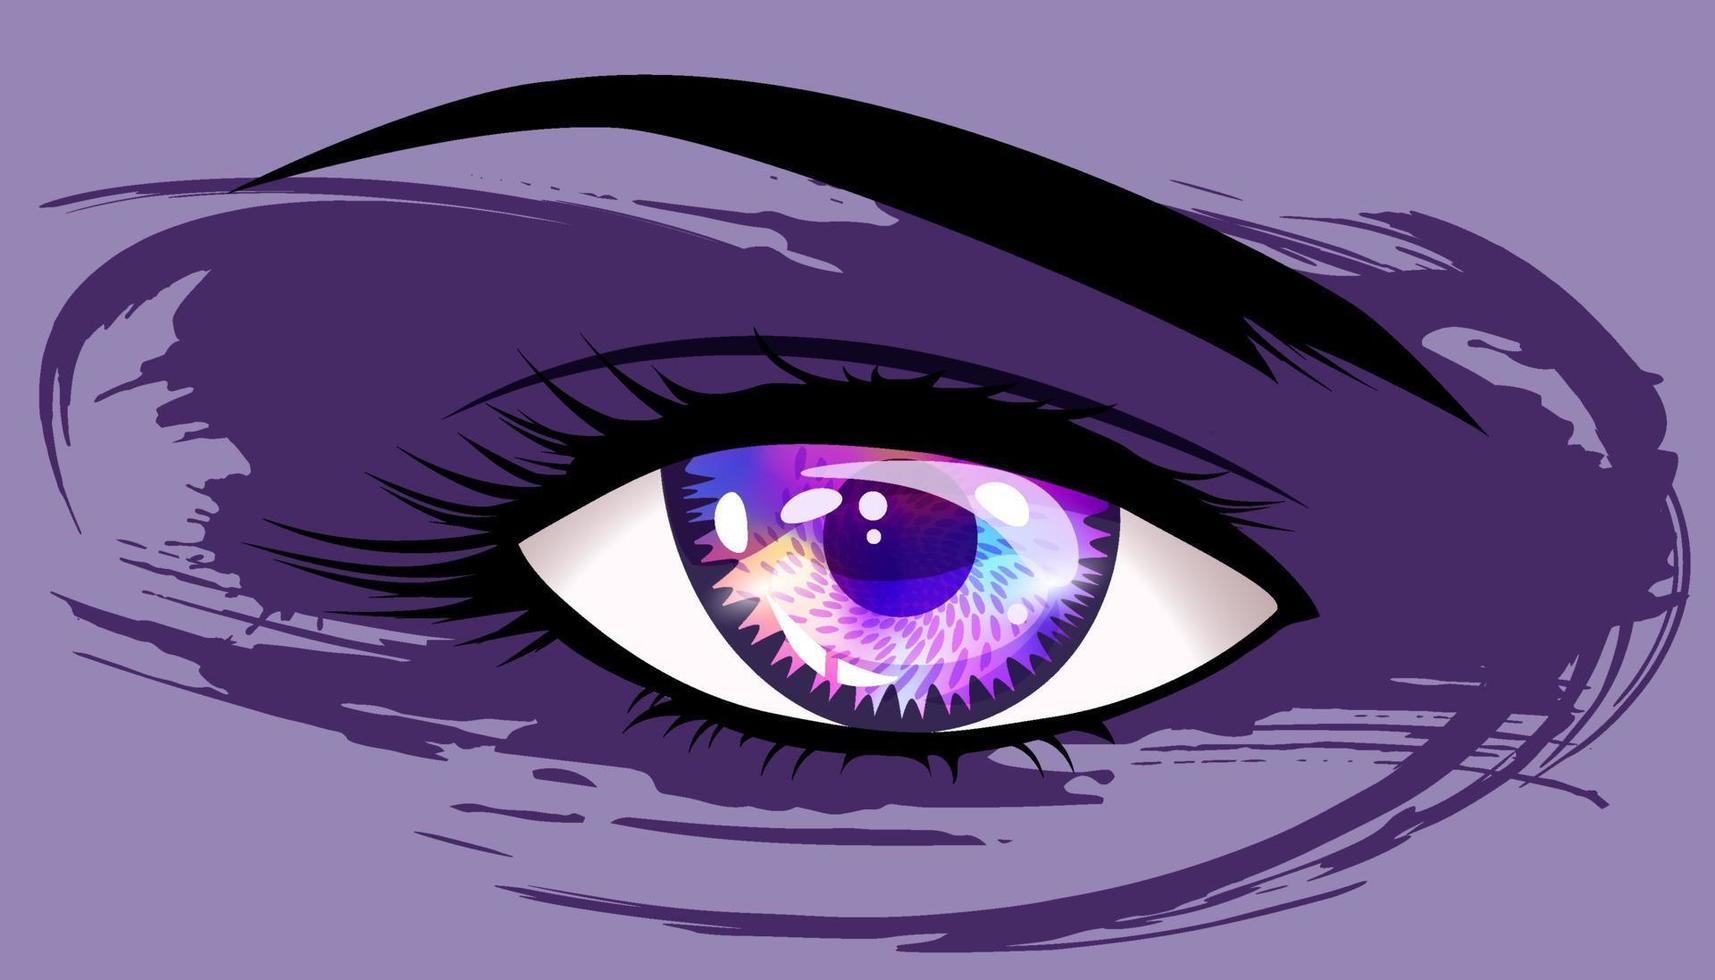 Purple eyes anime girl. vector